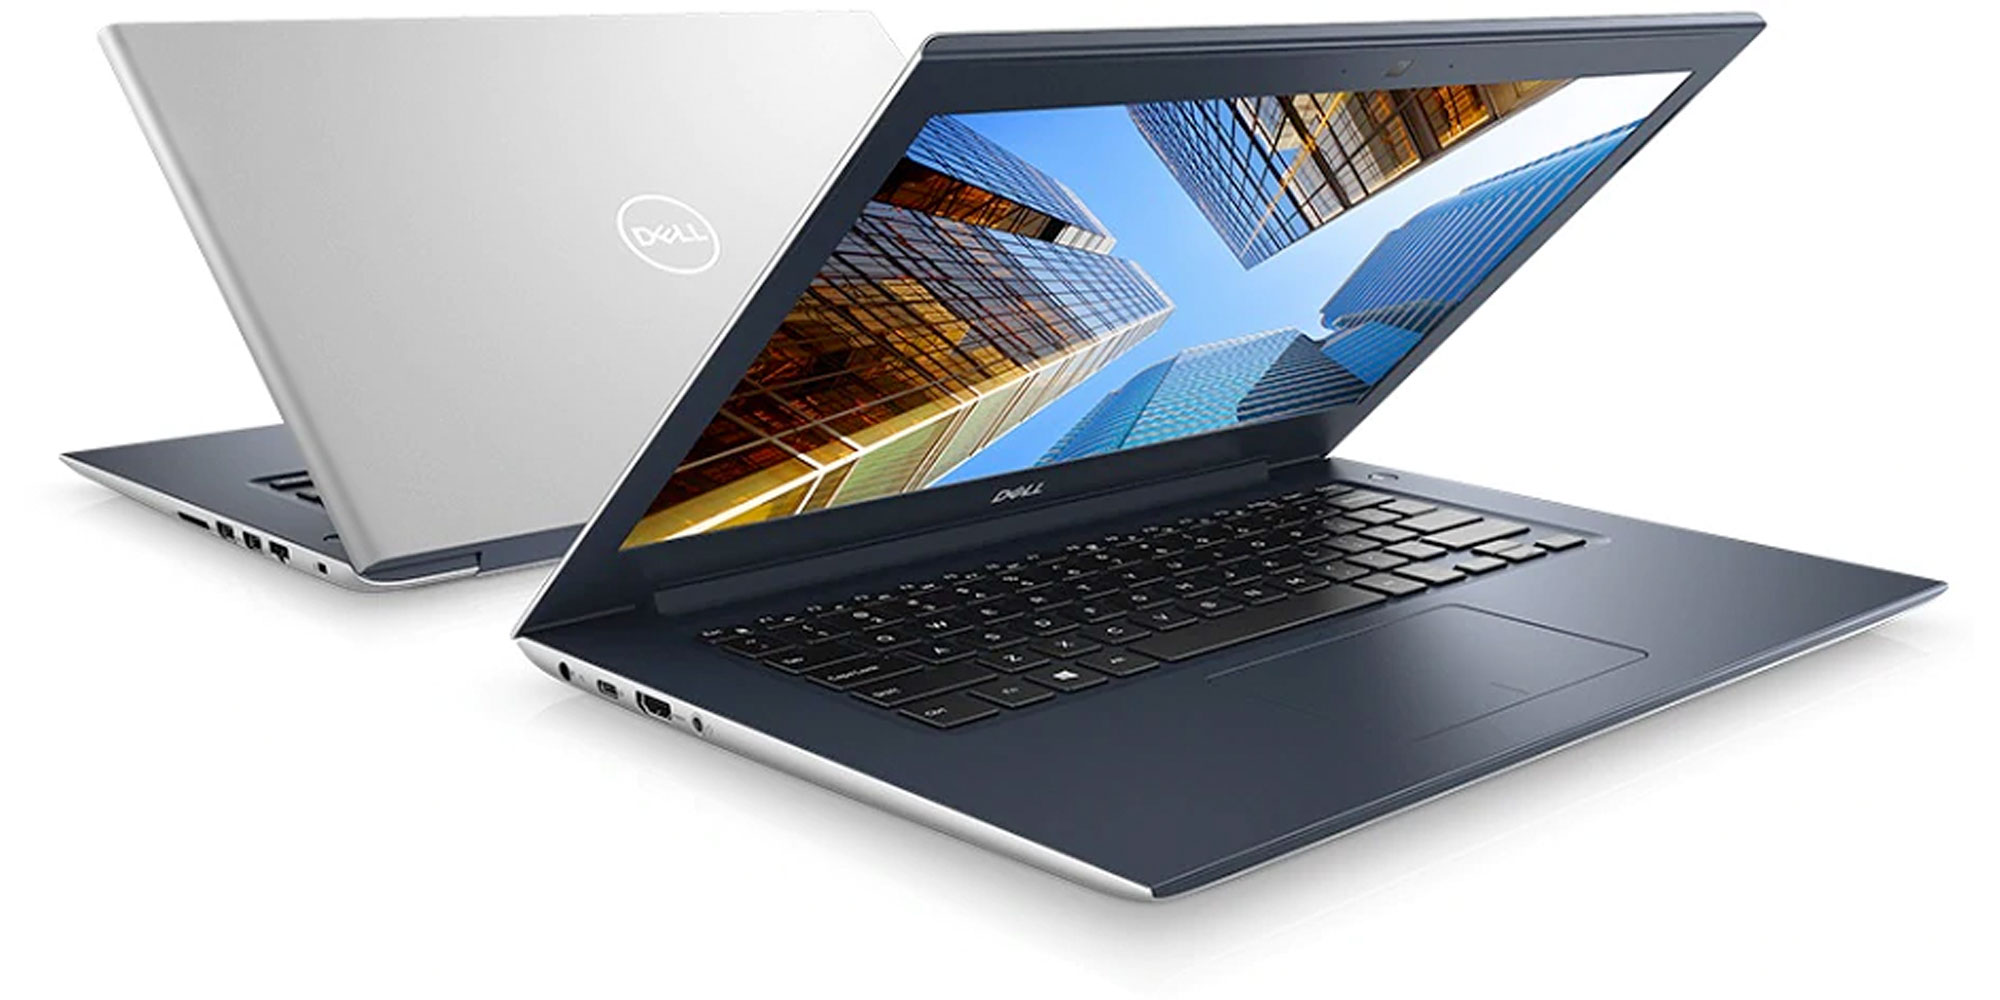 Dell's Vostro 14 laptop features a quad-core i5 processor & 256GB SSD